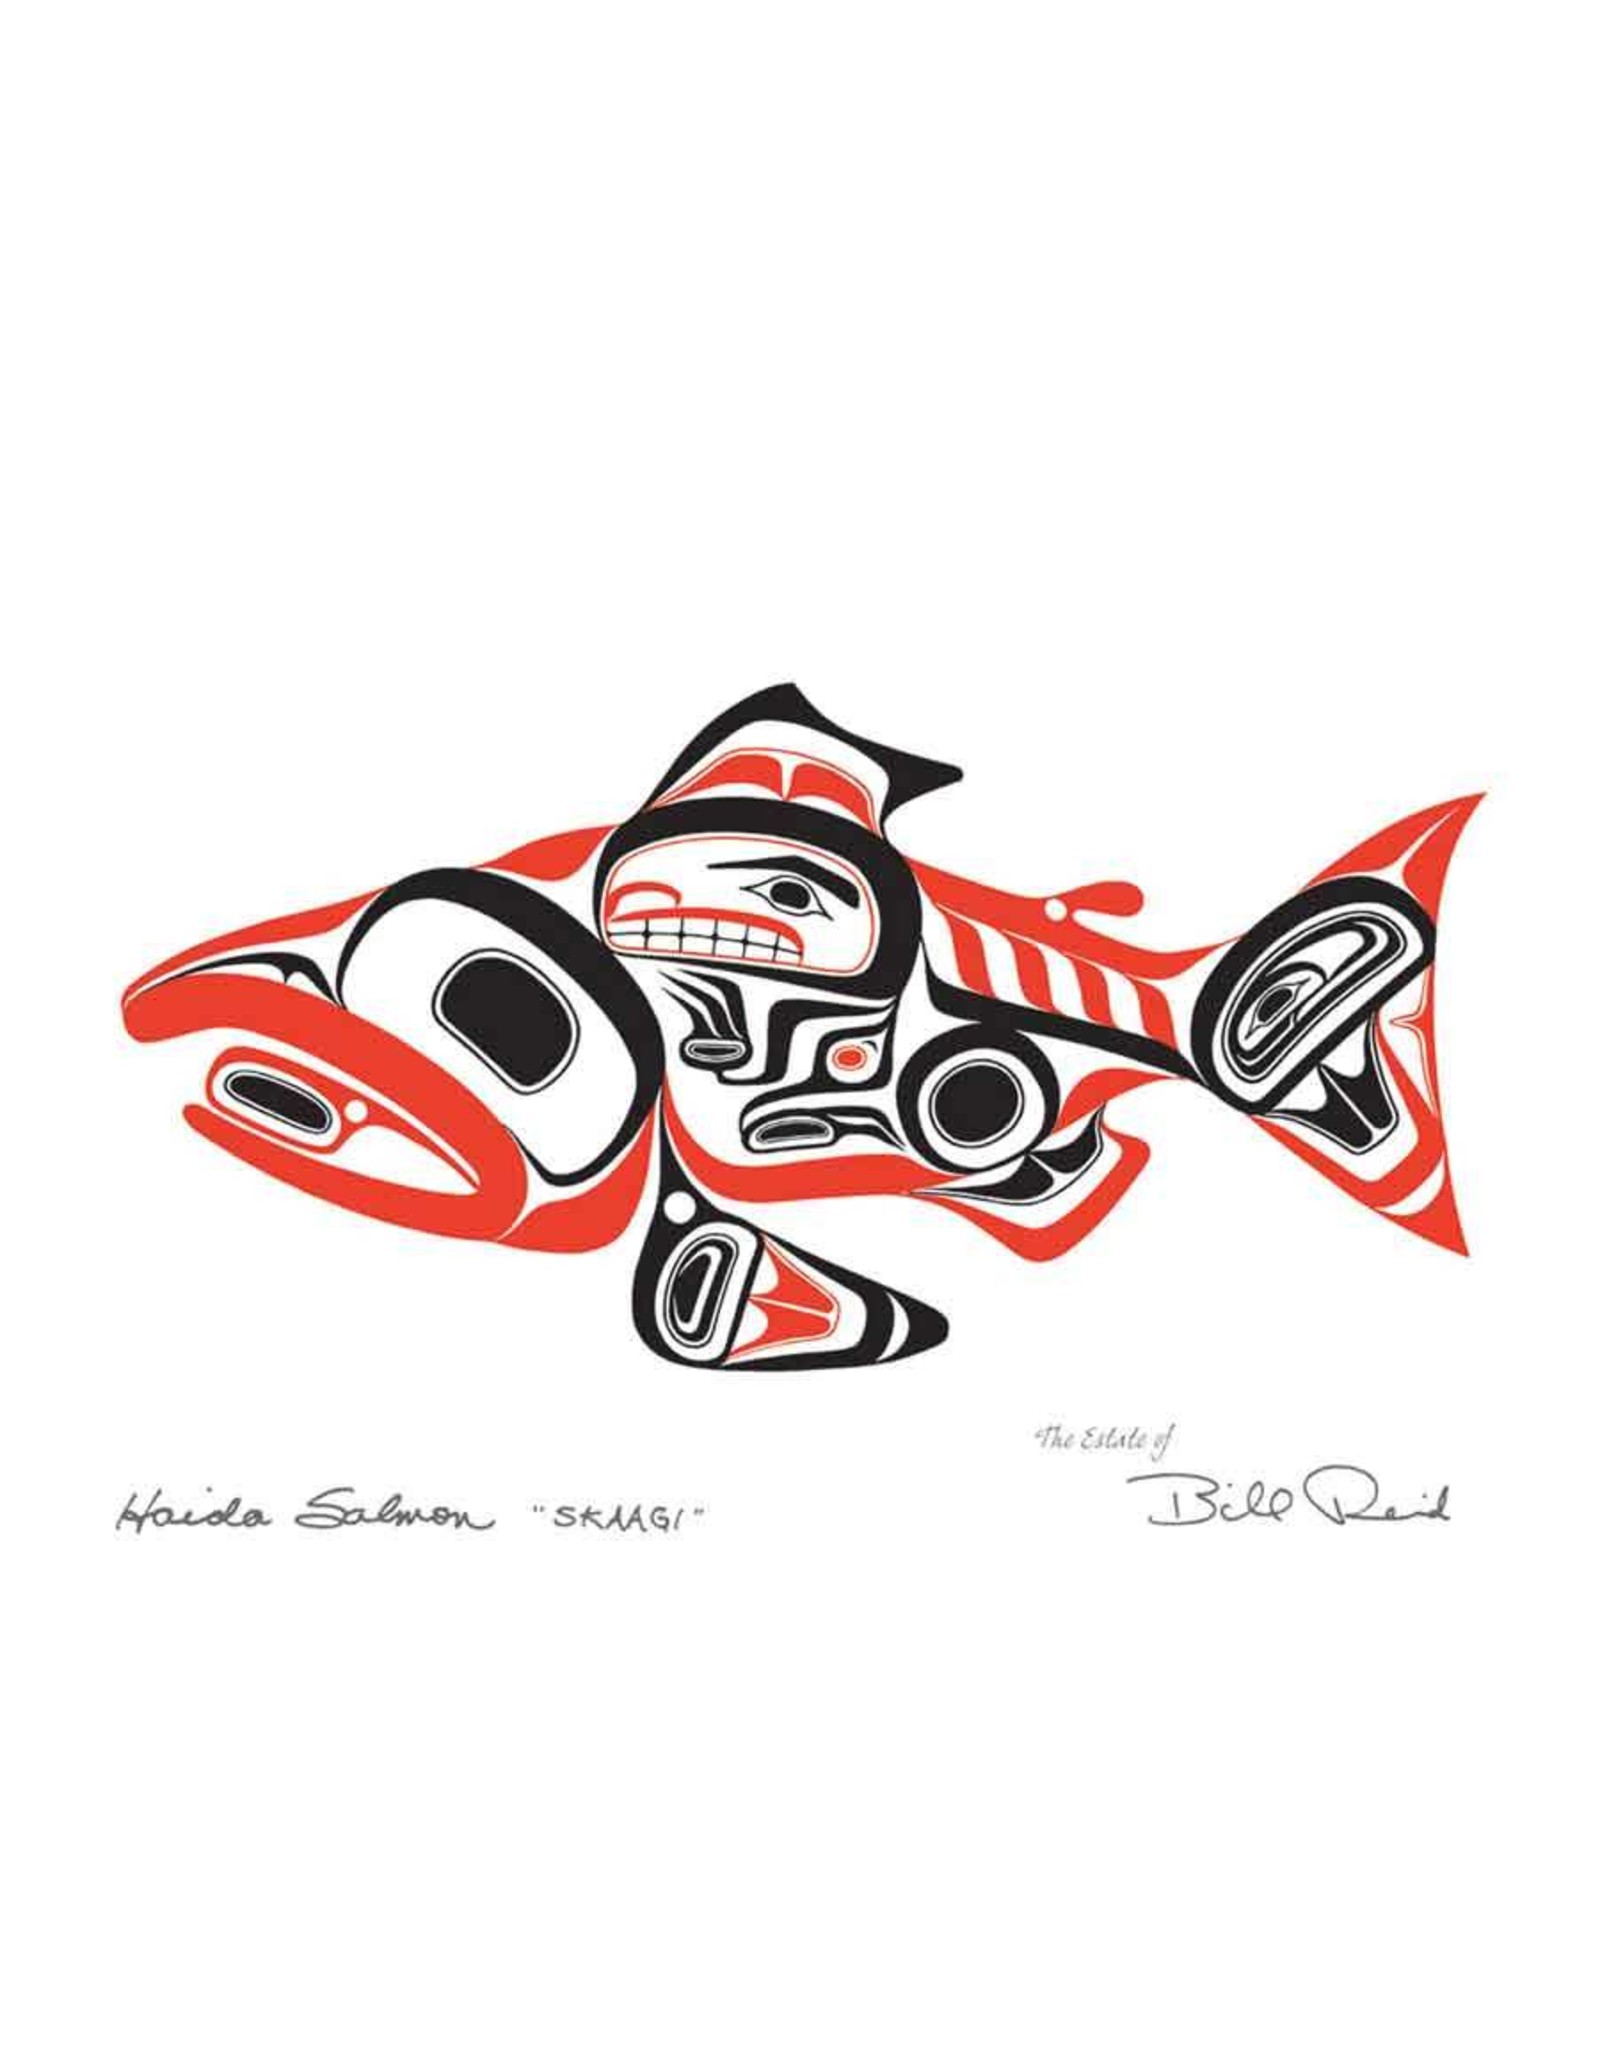 Haida Salmon - SKAAGI par Bill Reid  20028 Montée sur Passe-Partout